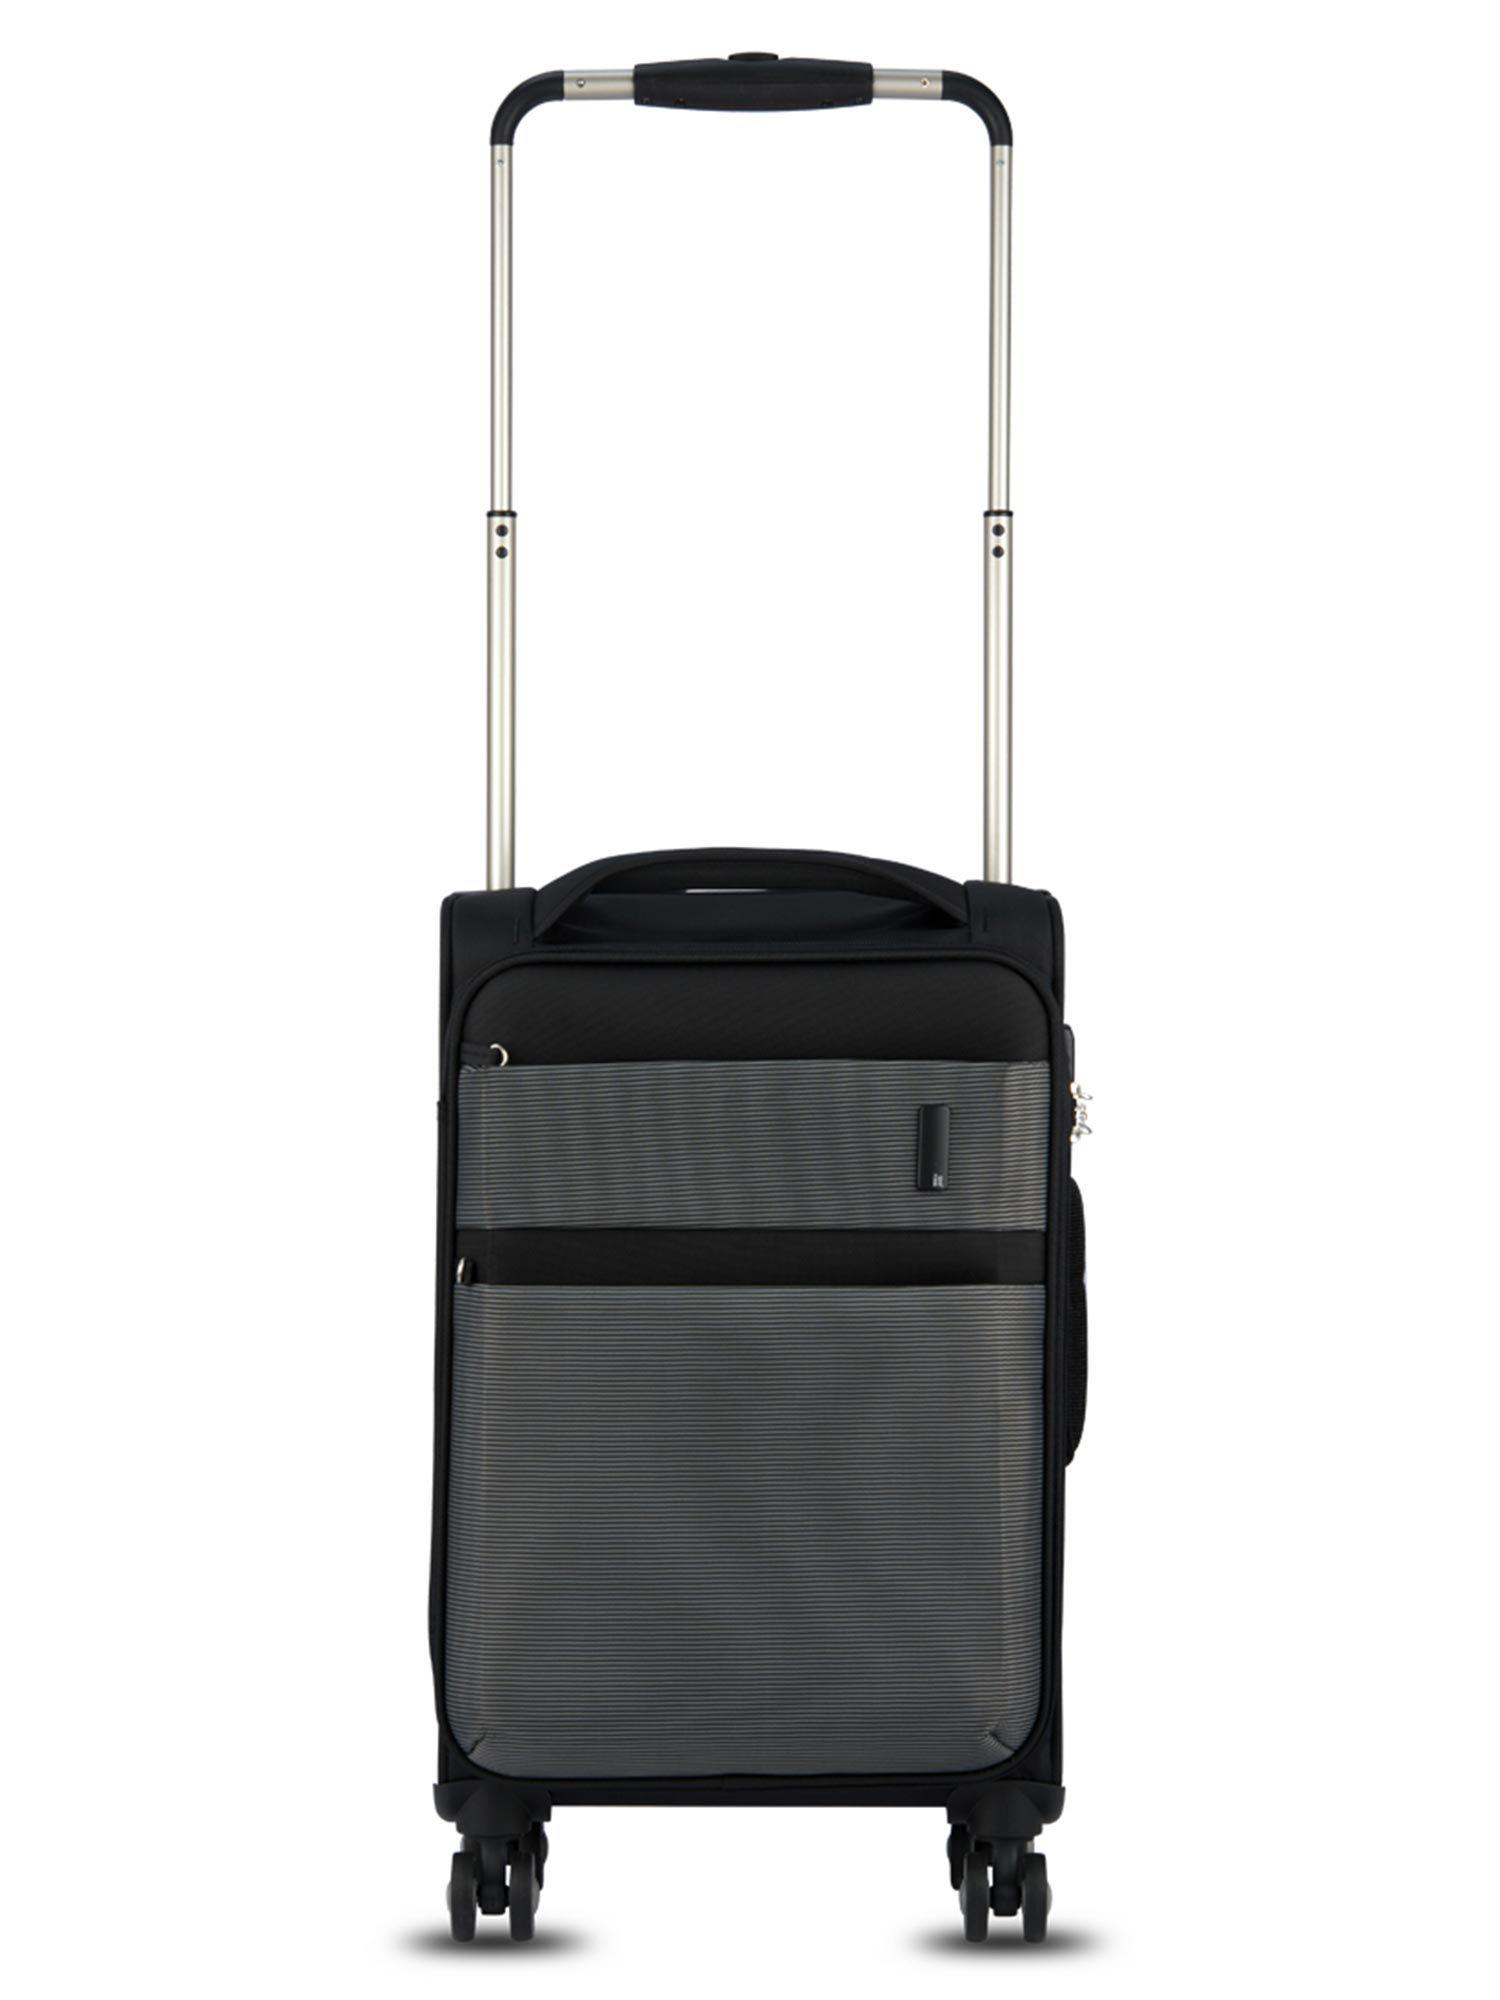 world's-lightest-bag-debonair-trolley-bag-black